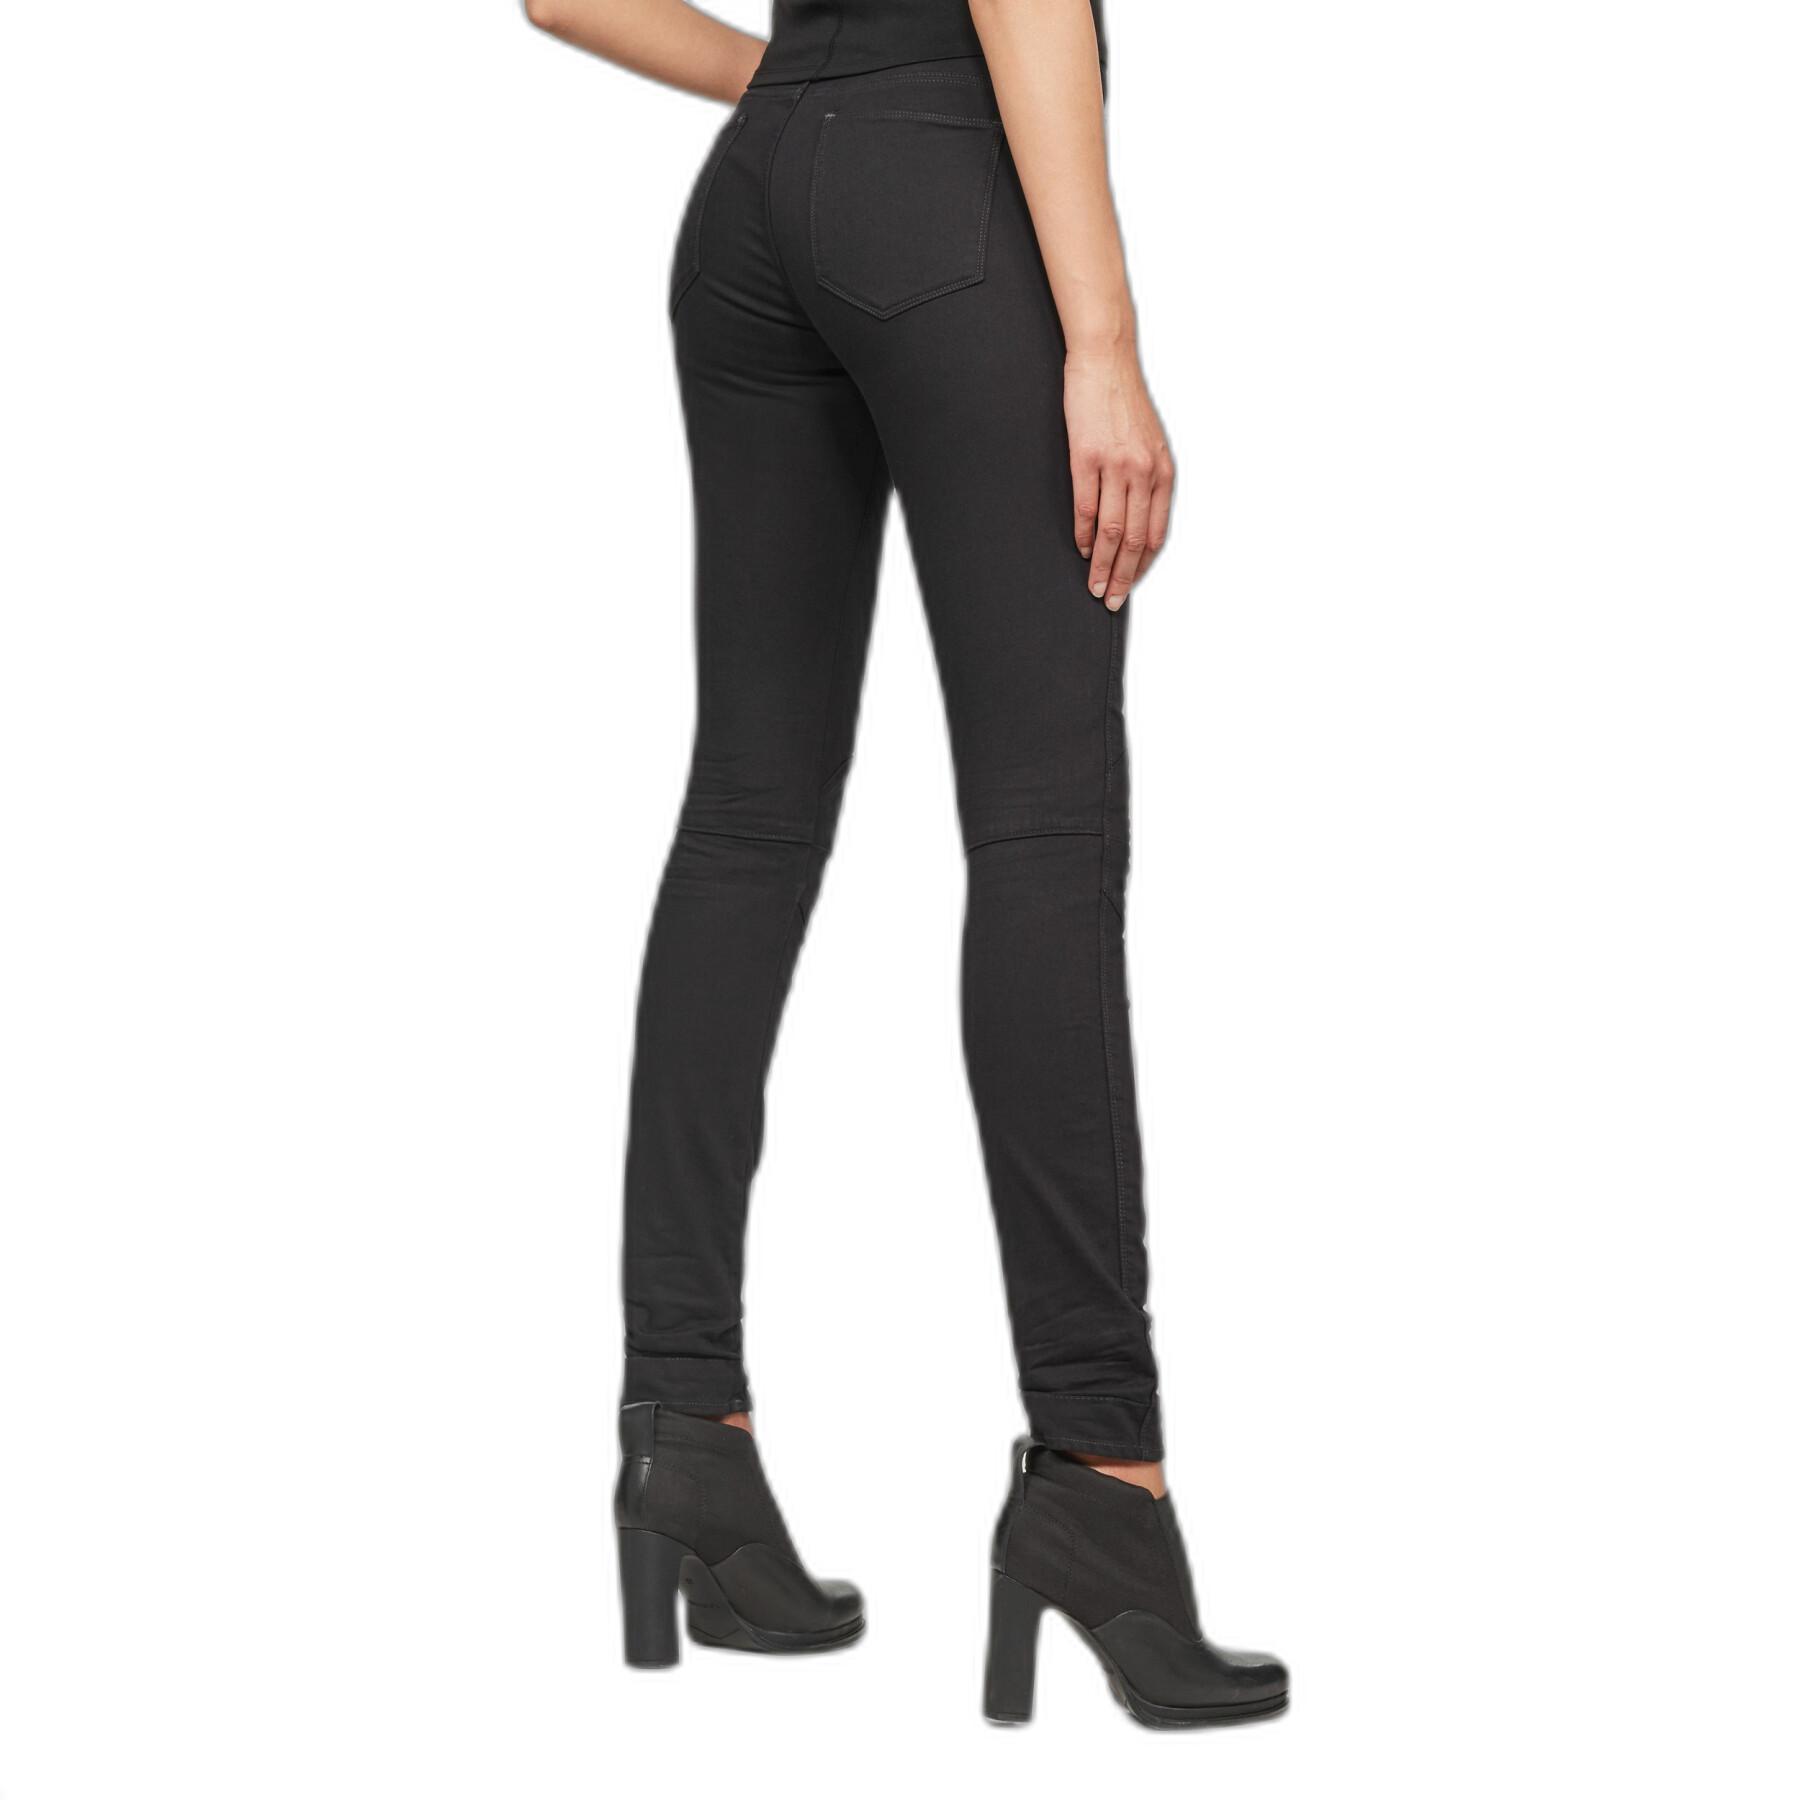 Women's mid-rise skinny jeans G-Star 5622